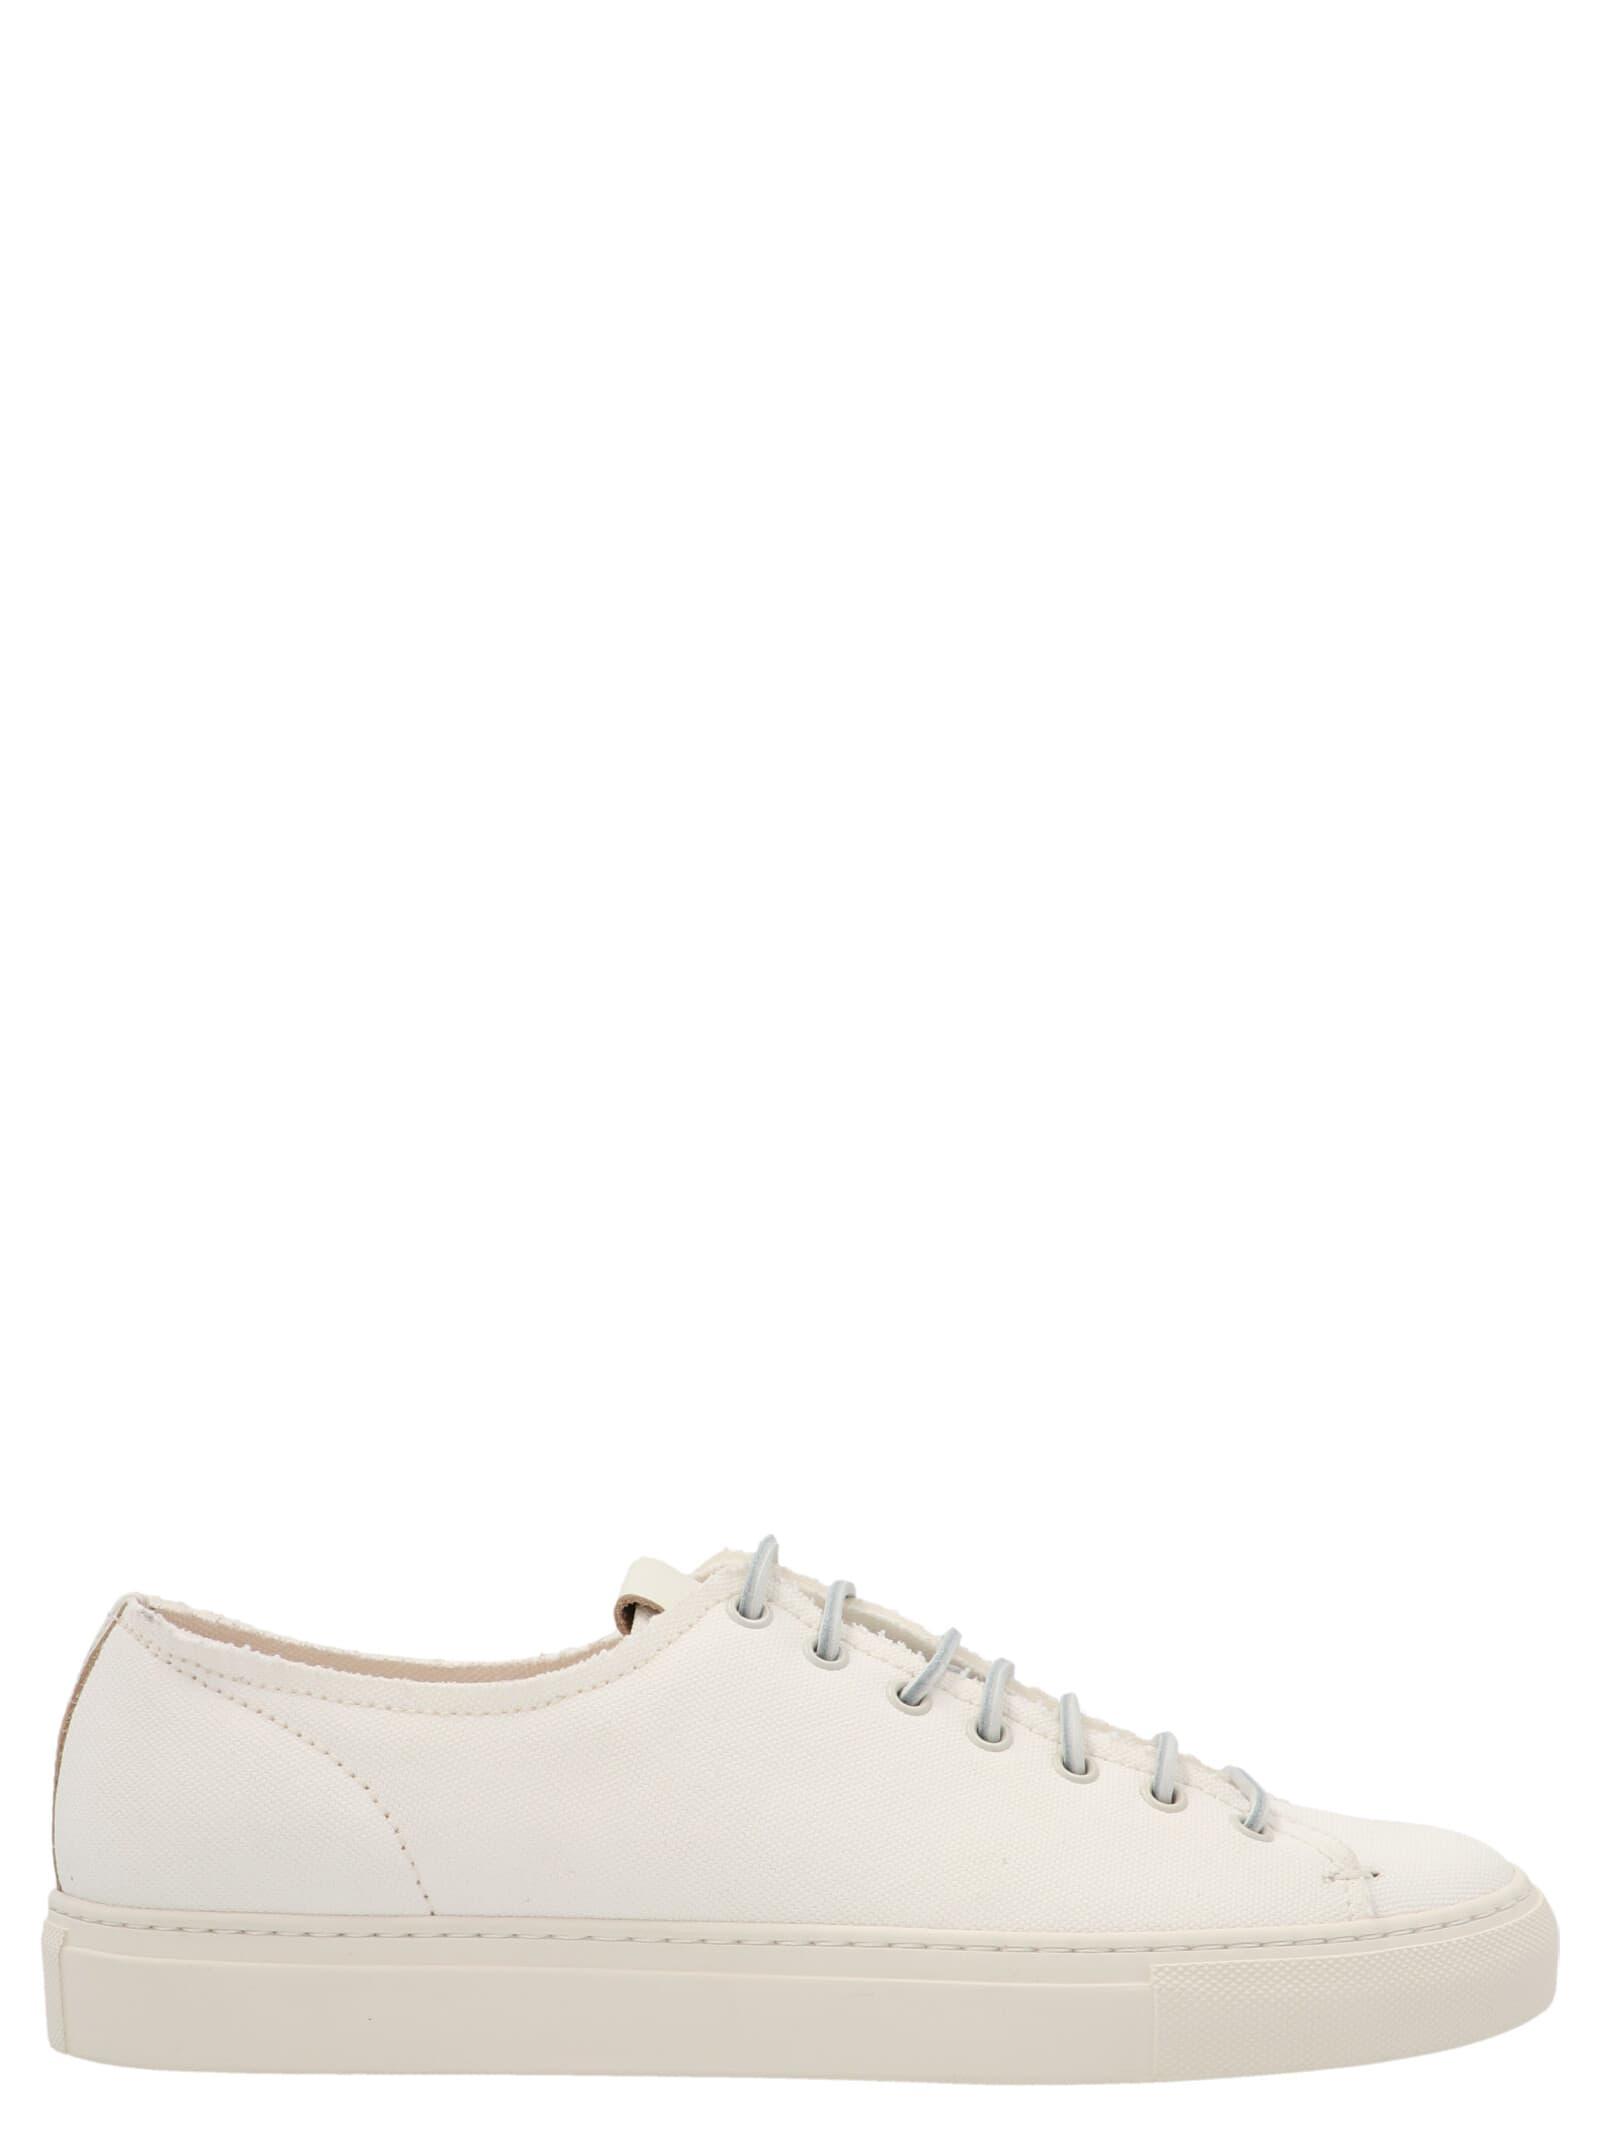 Buttero Tanino Sneakers in White for Men | Lyst